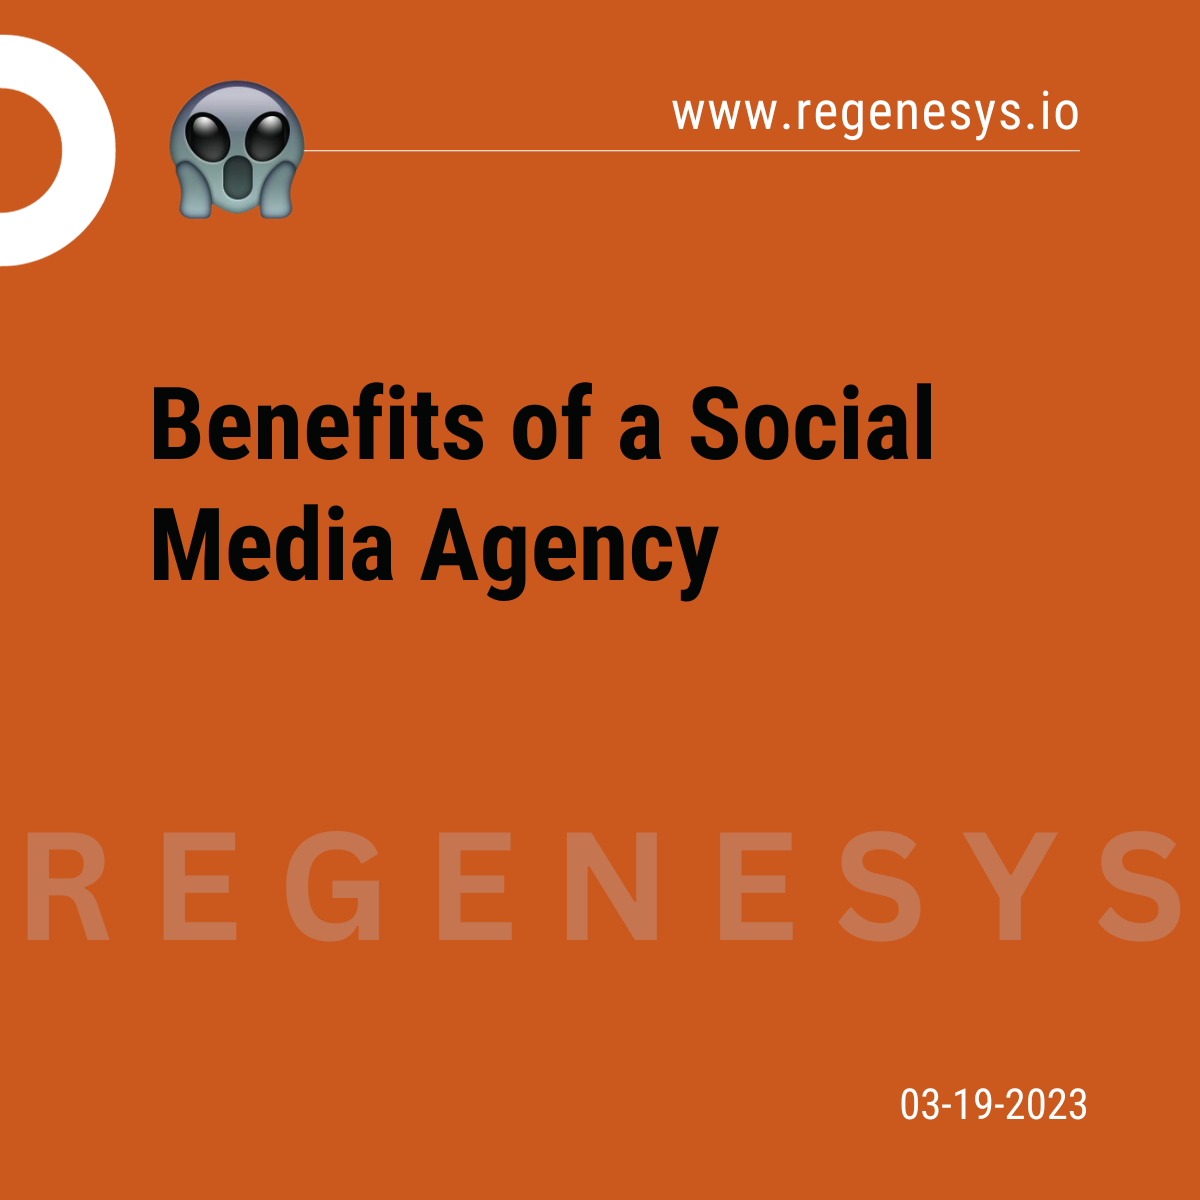 Beneftis of a Social Media Agency